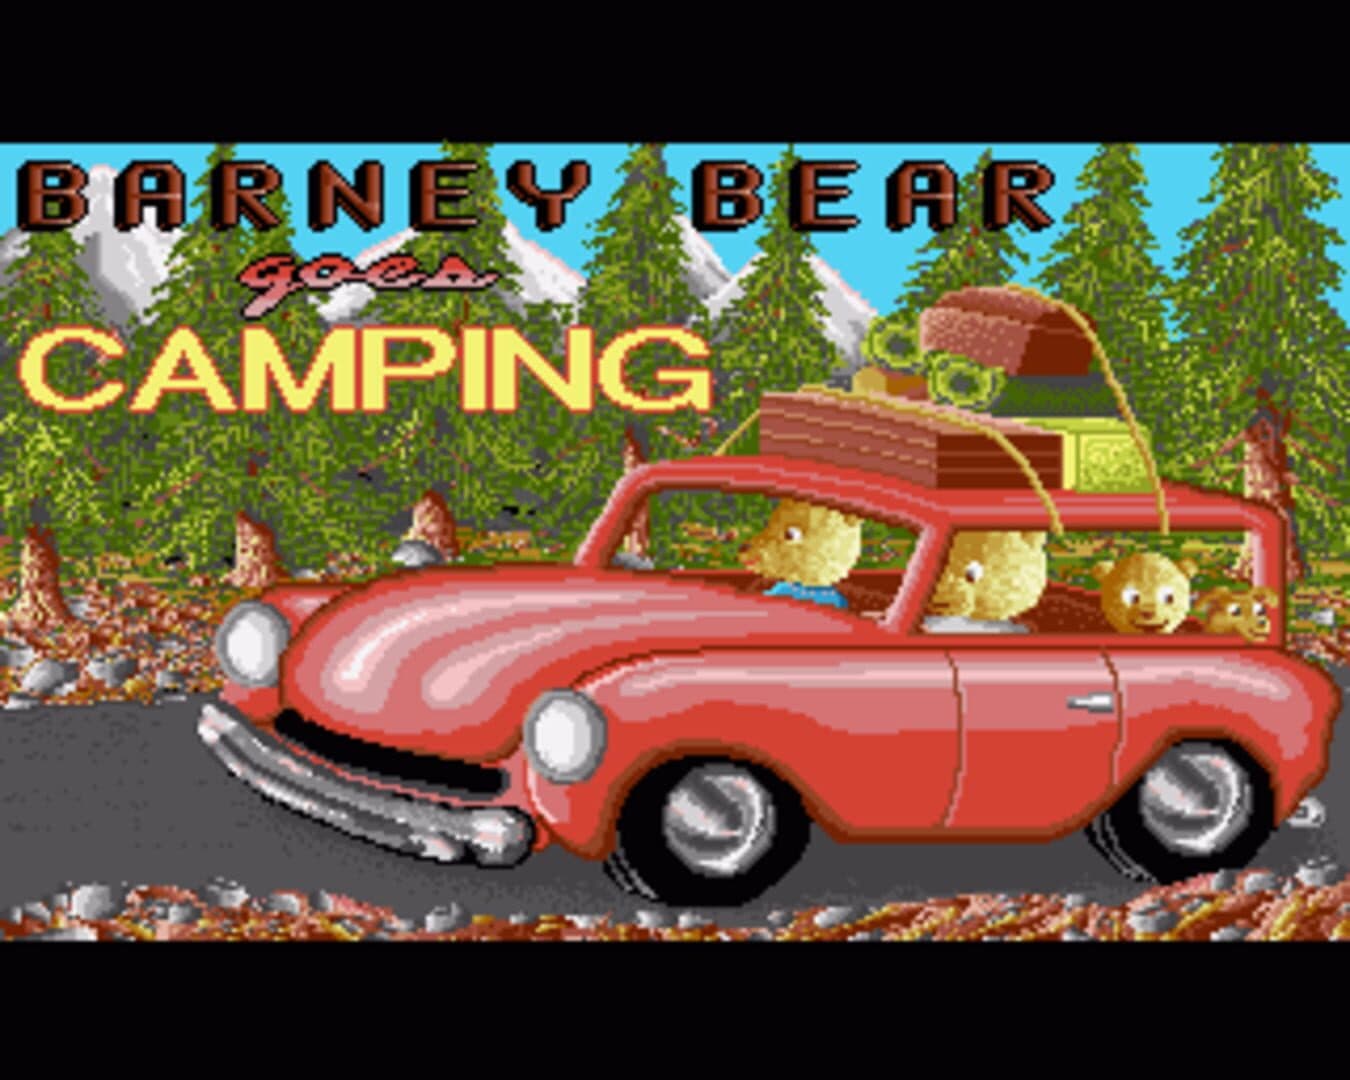 Barney Bear Goes Camping Image